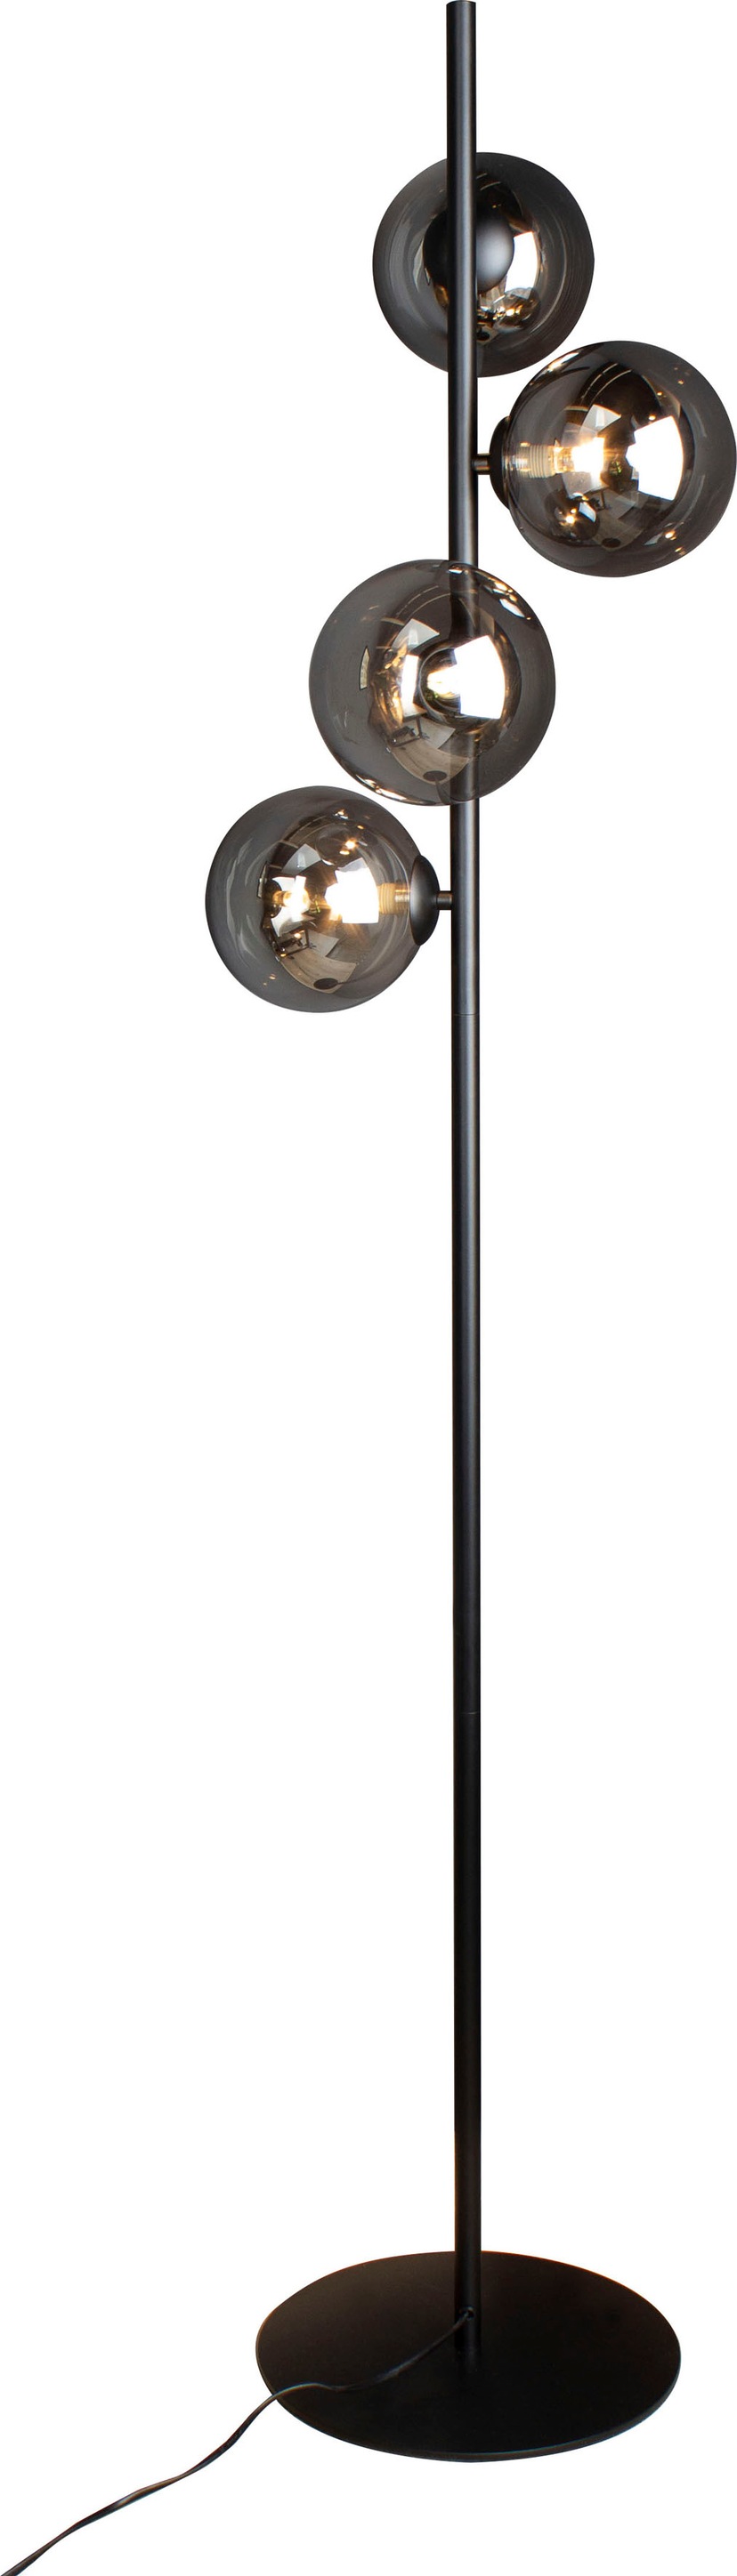 Pauleen Stehlampe »Grand Reverie«, 10 flammig-flammig, E27, Stoffschirm Rosa  auf Raten kaufen